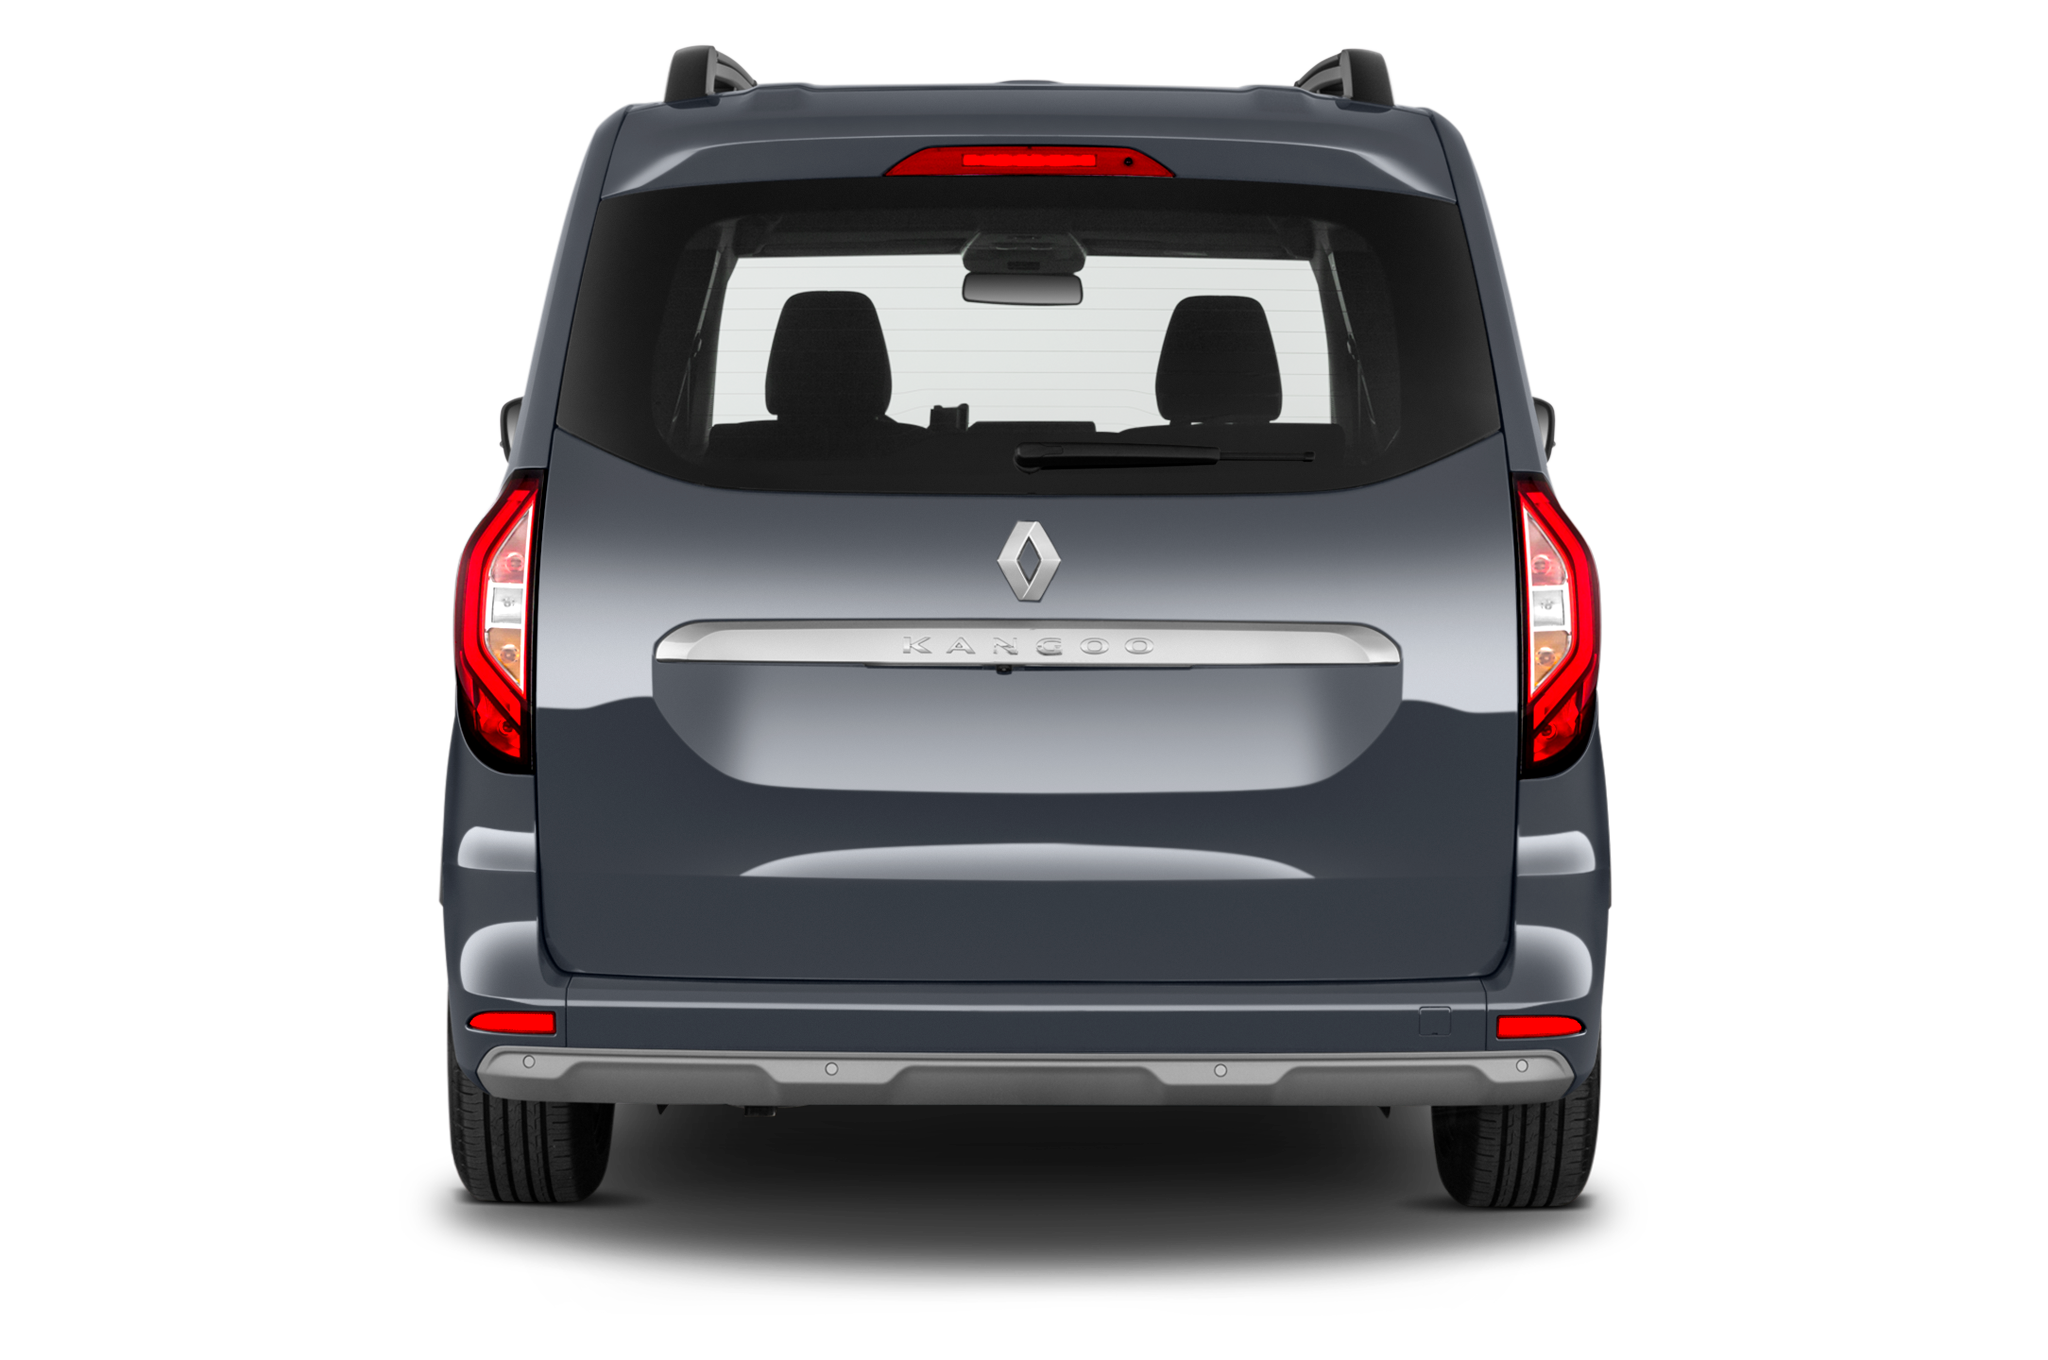 Renault Kangoo (Baujahr 2021) Intens 5 Türen Heckansicht